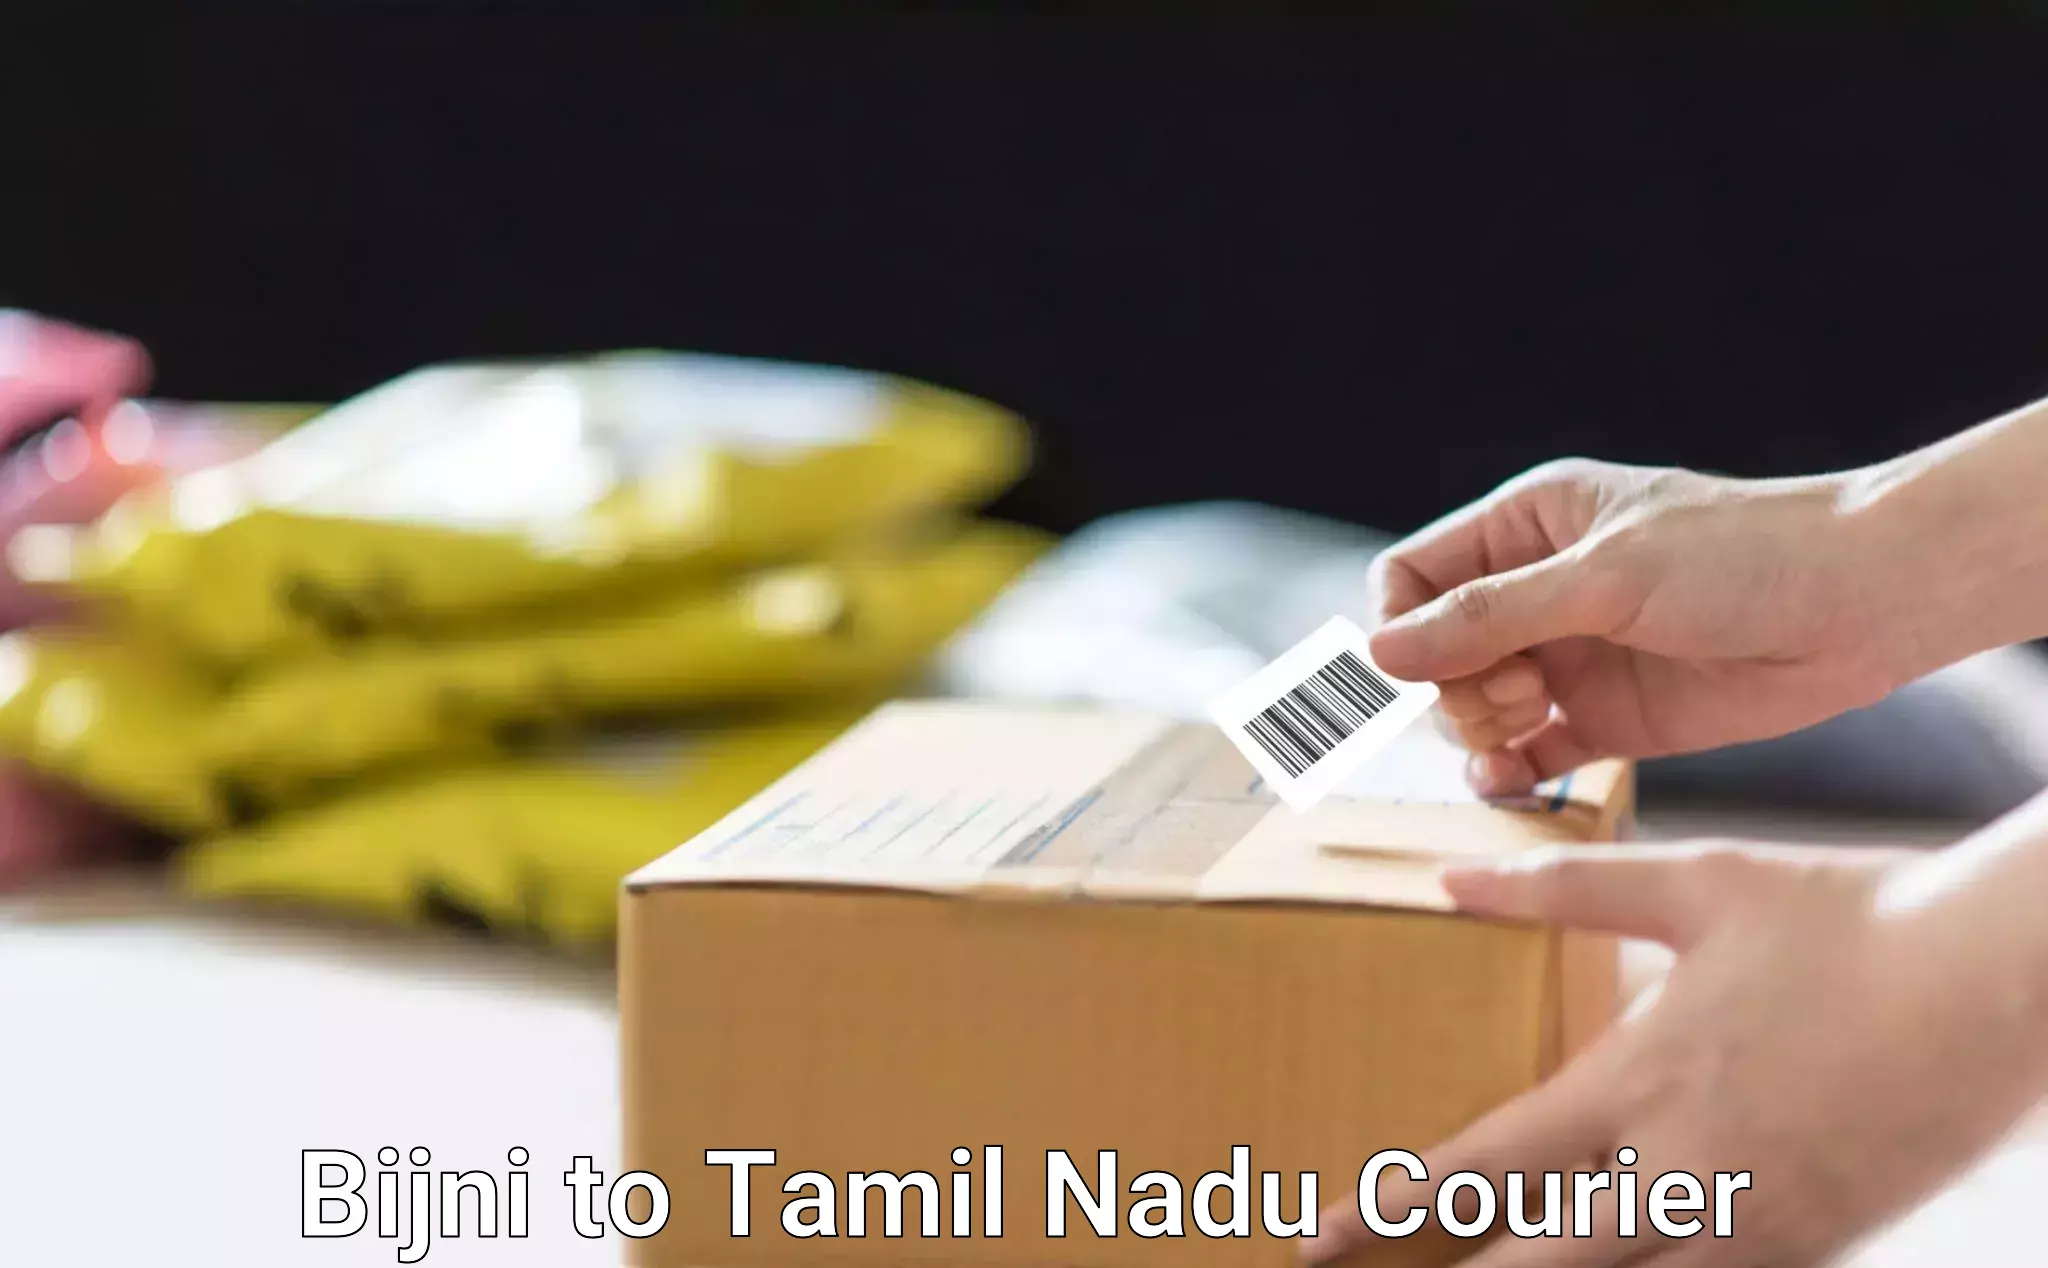 Customizable shipping options in Bijni to Tamil Nadu